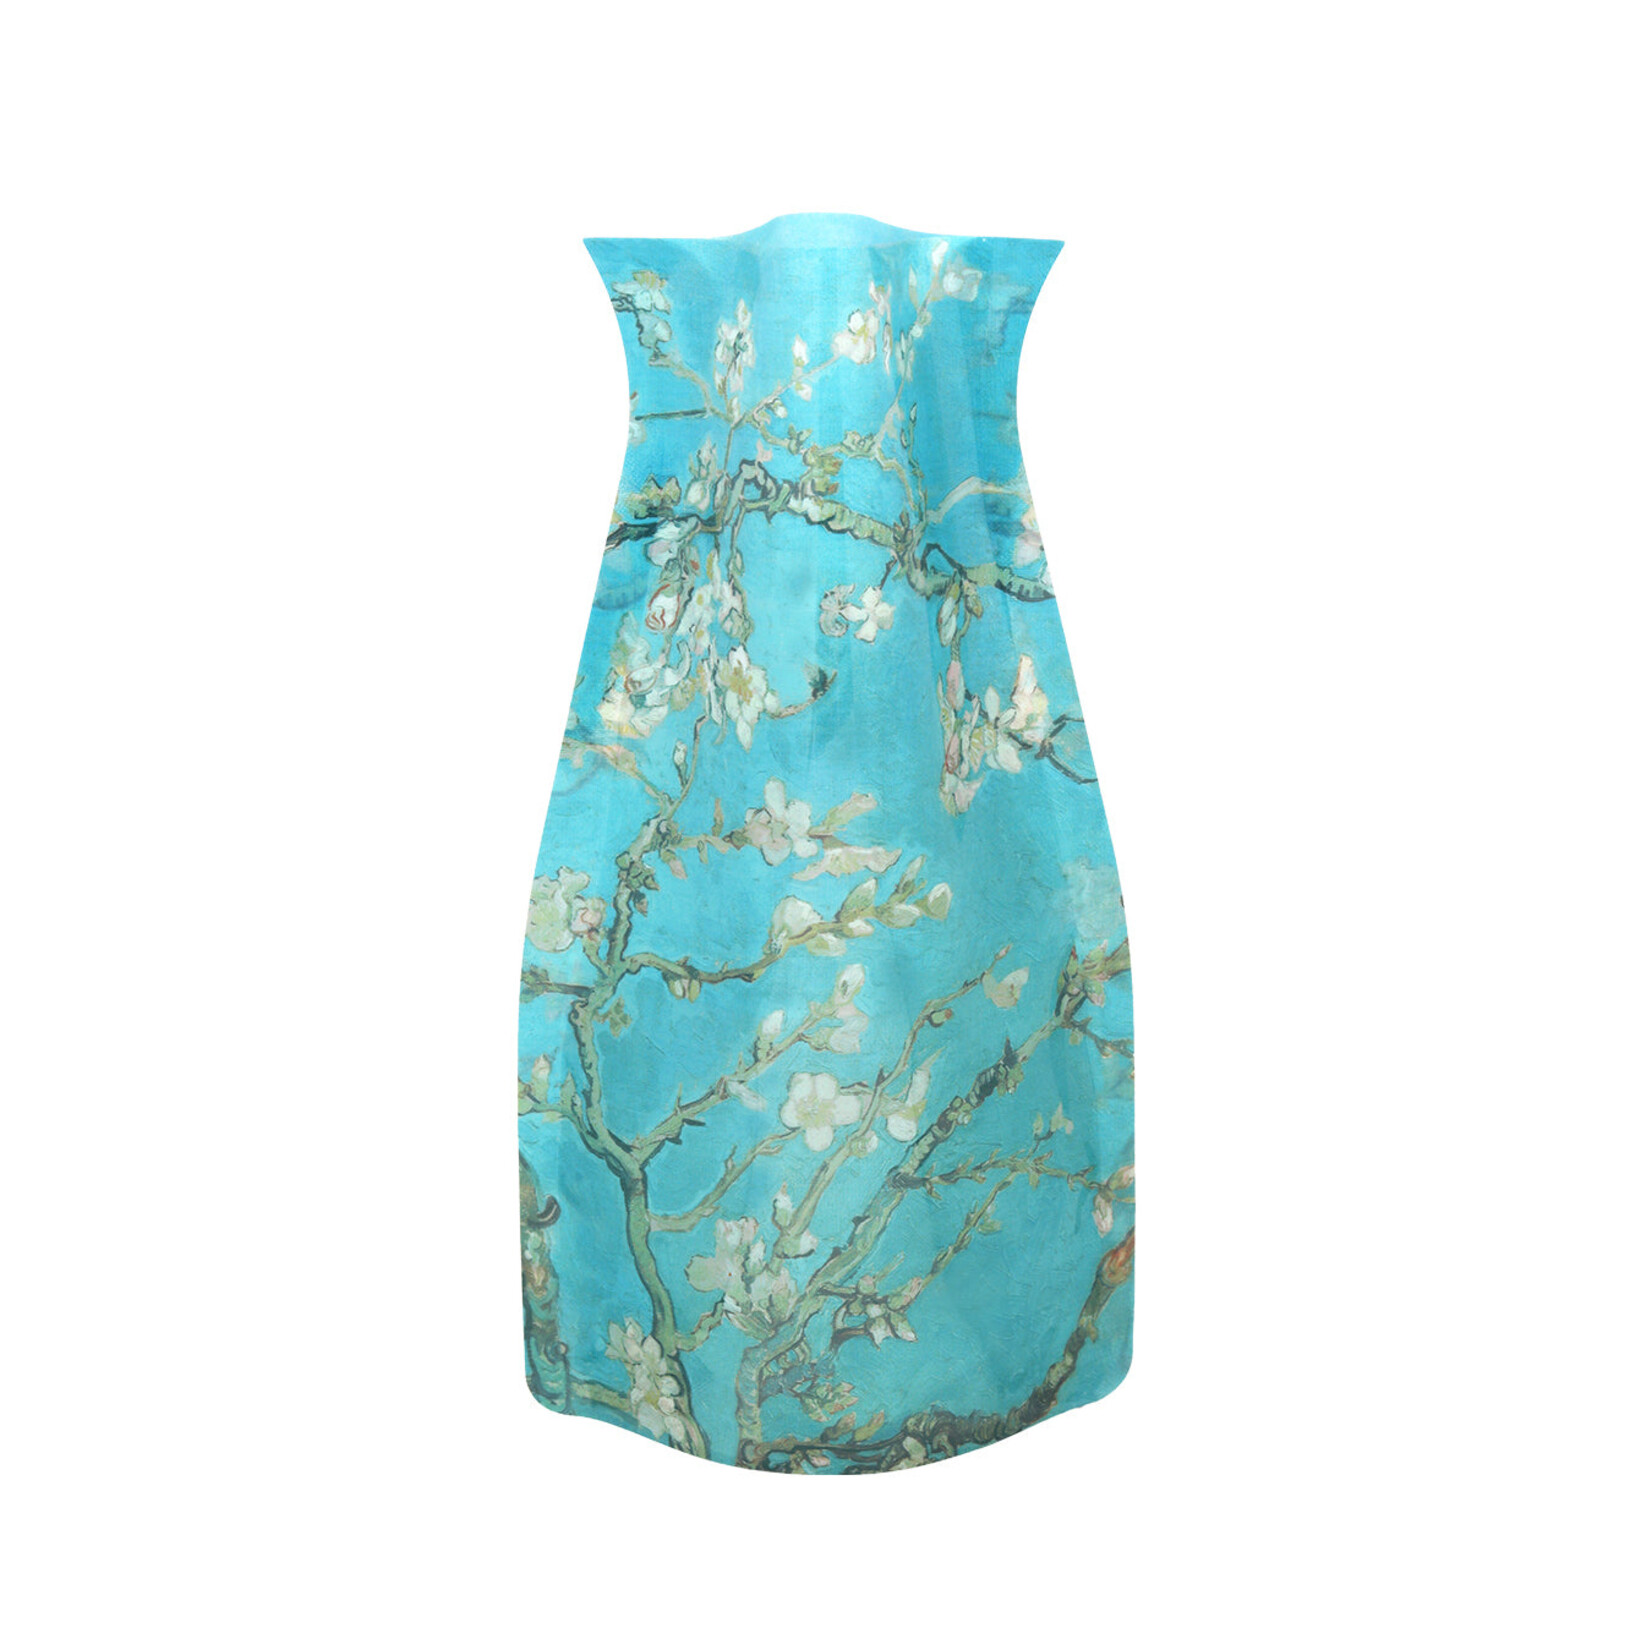 Modgy Vincent van Gogh Almond Blossom Modgy Vase